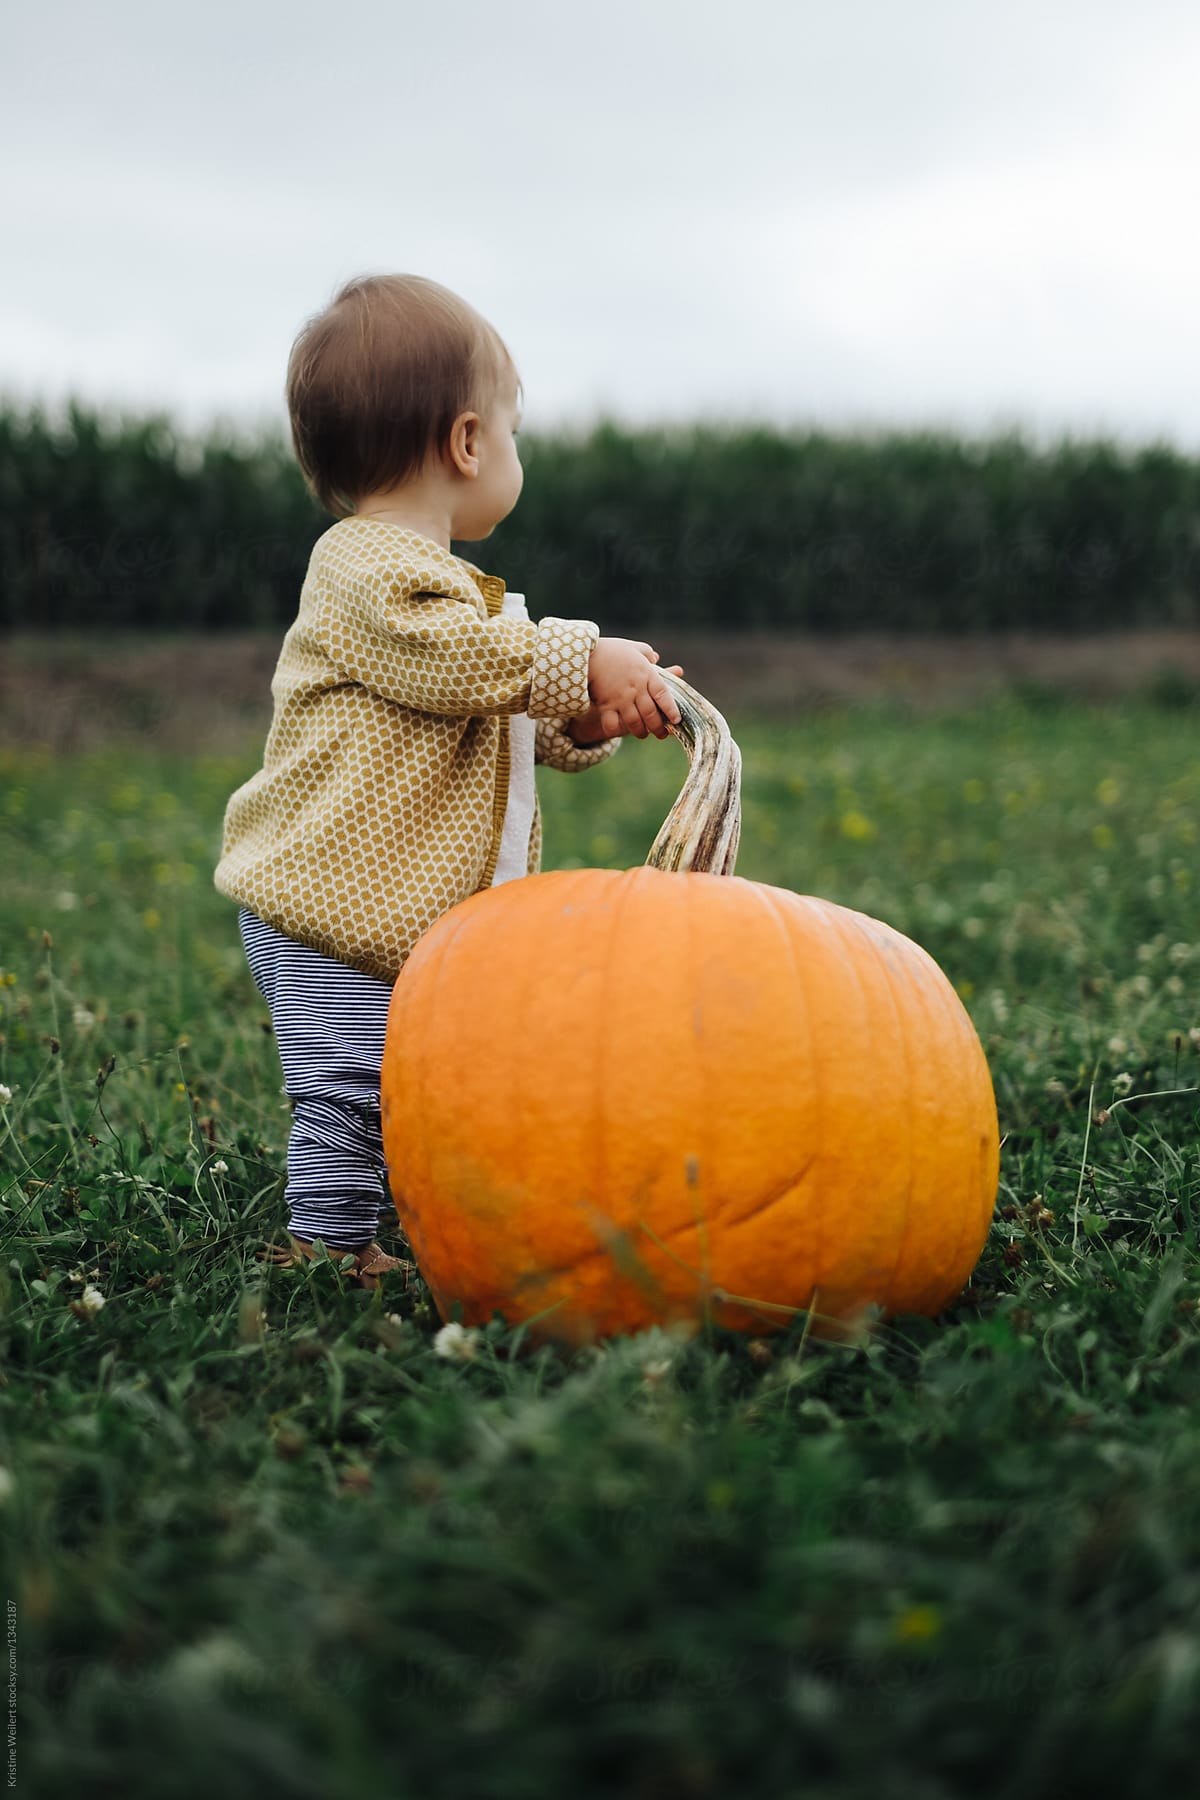 Young toddler picks large pumpkin